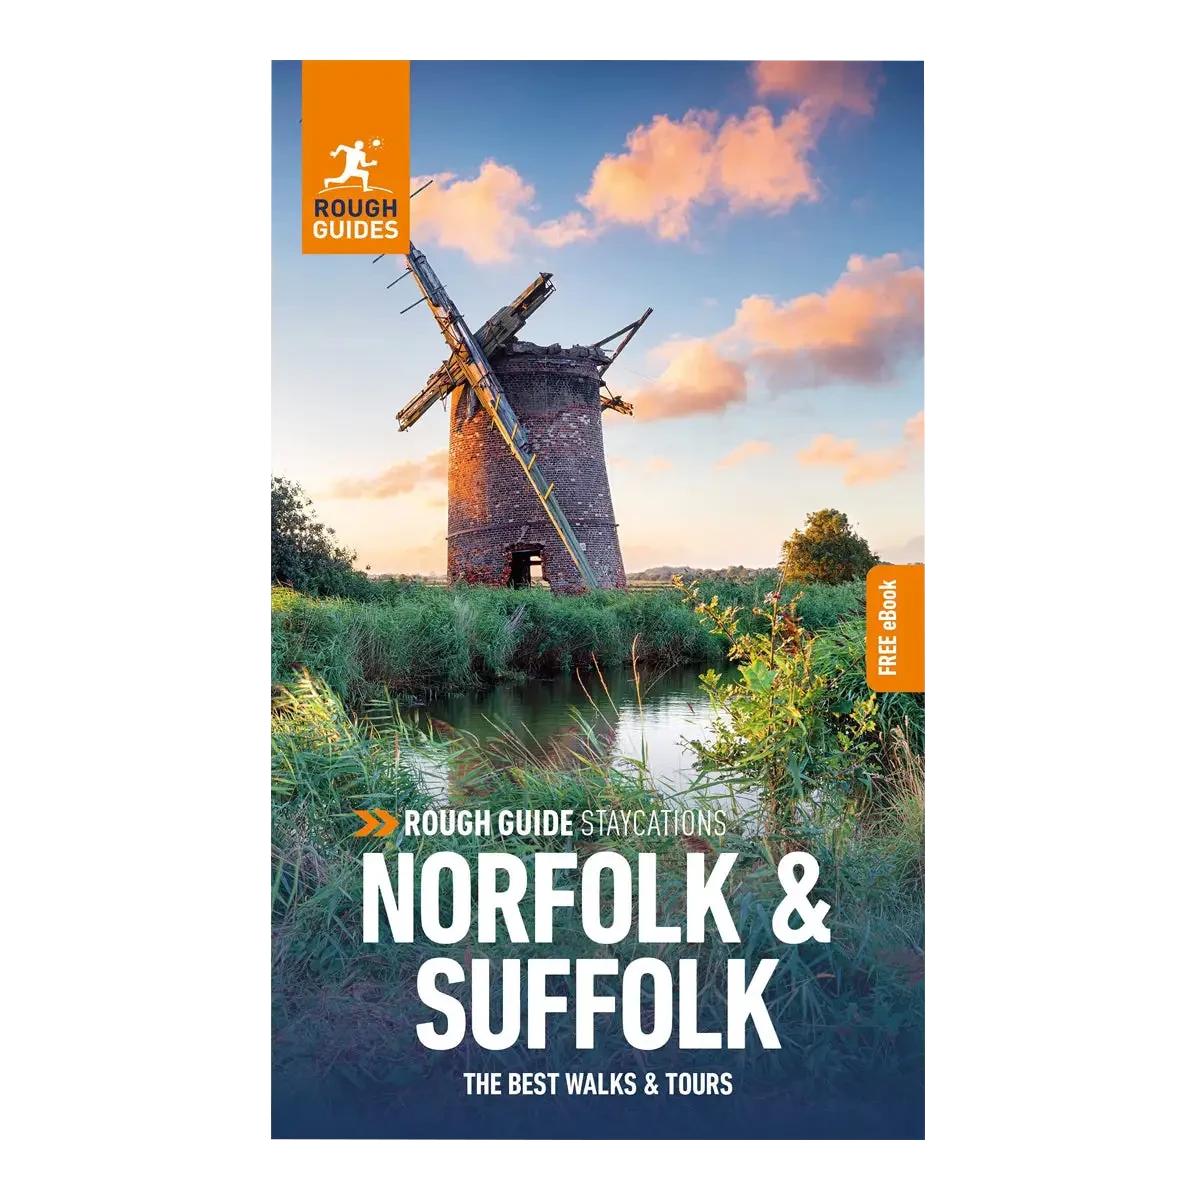 Rough Guides Ltd Rough Guide Staycation Norfolk & Suffolk